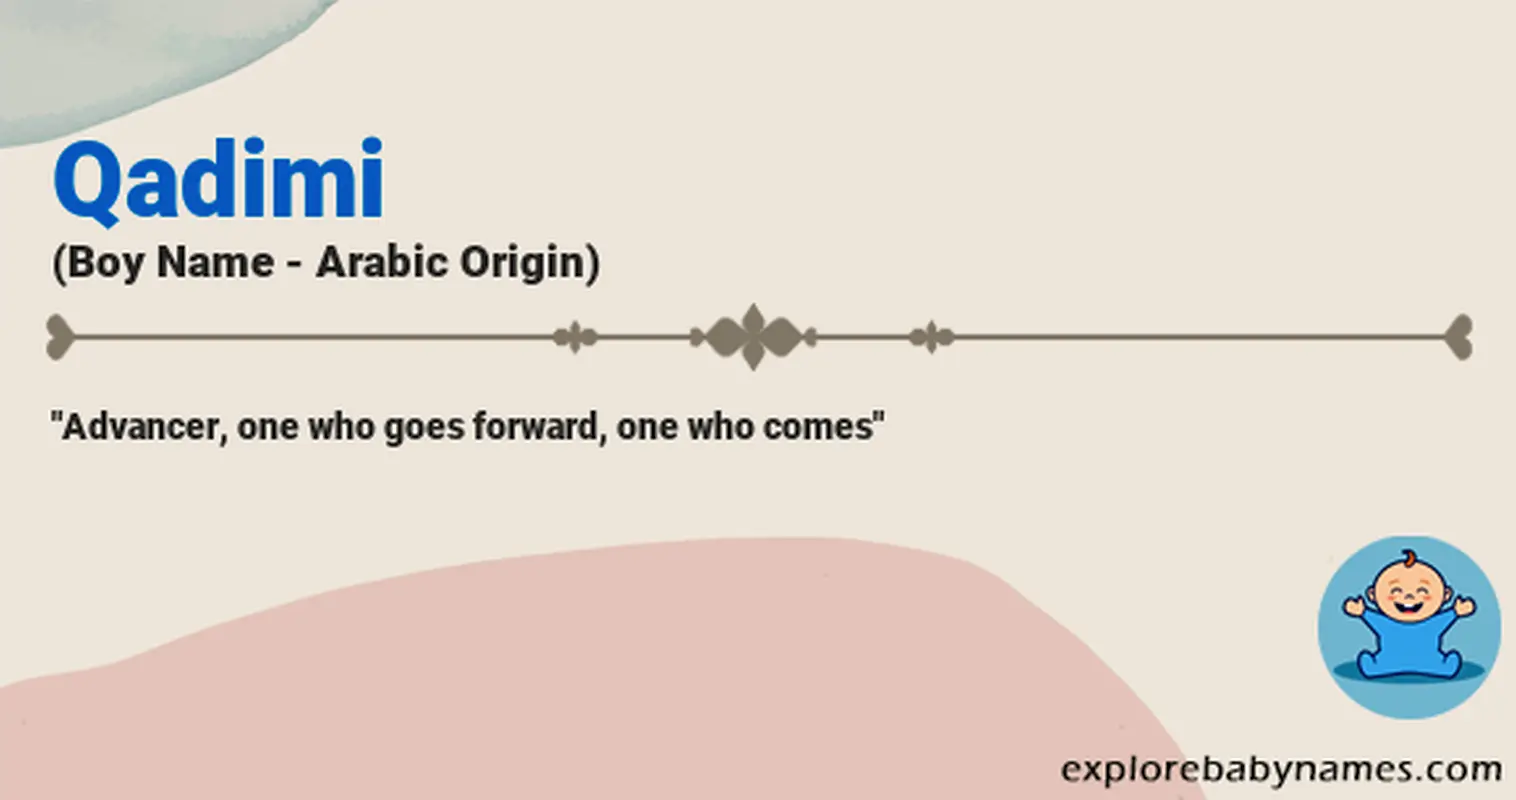 Meaning of Qadimi